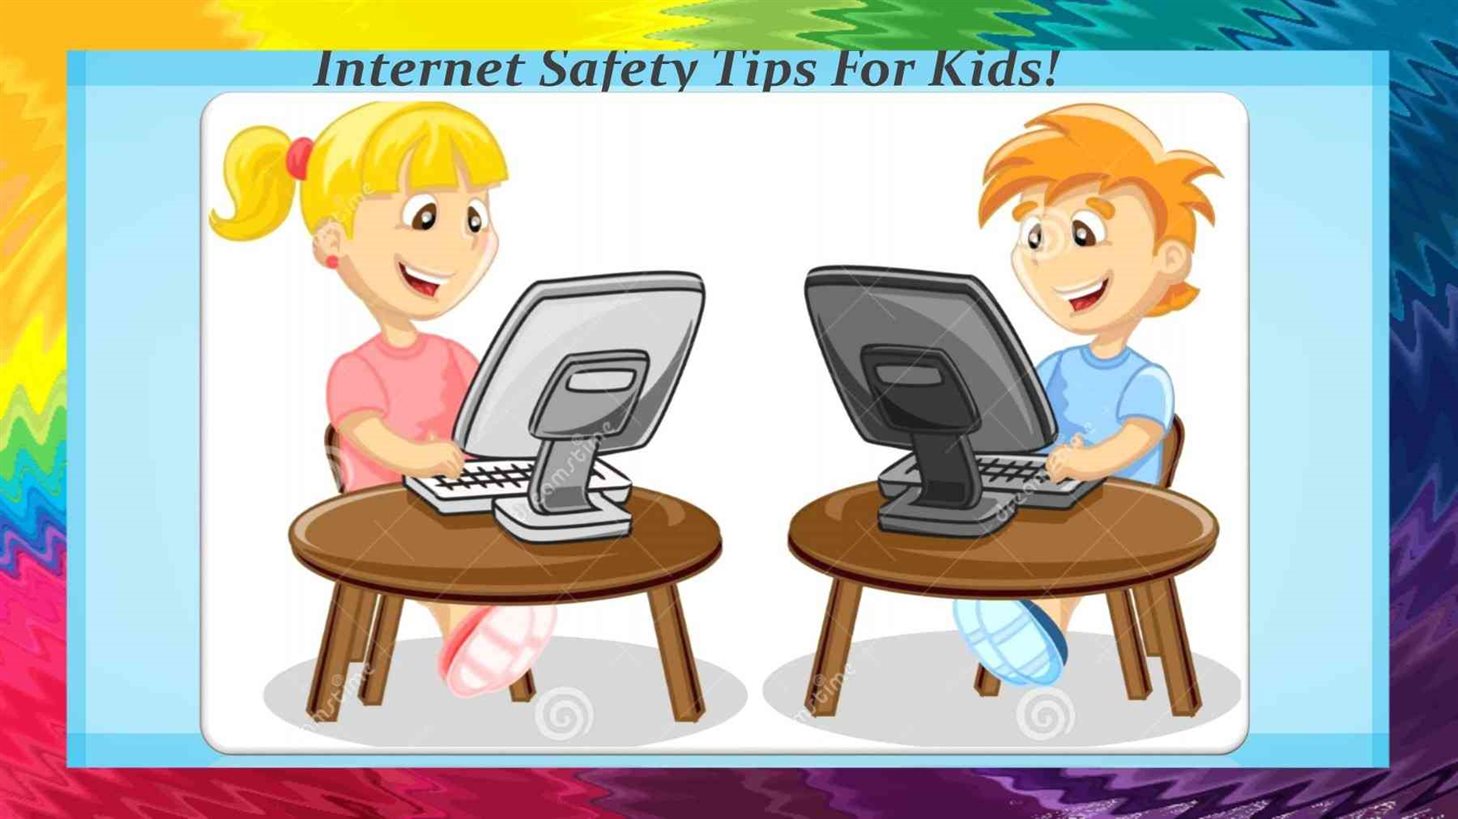 8 Internet Safety Tips for Kids on How to Safe Online